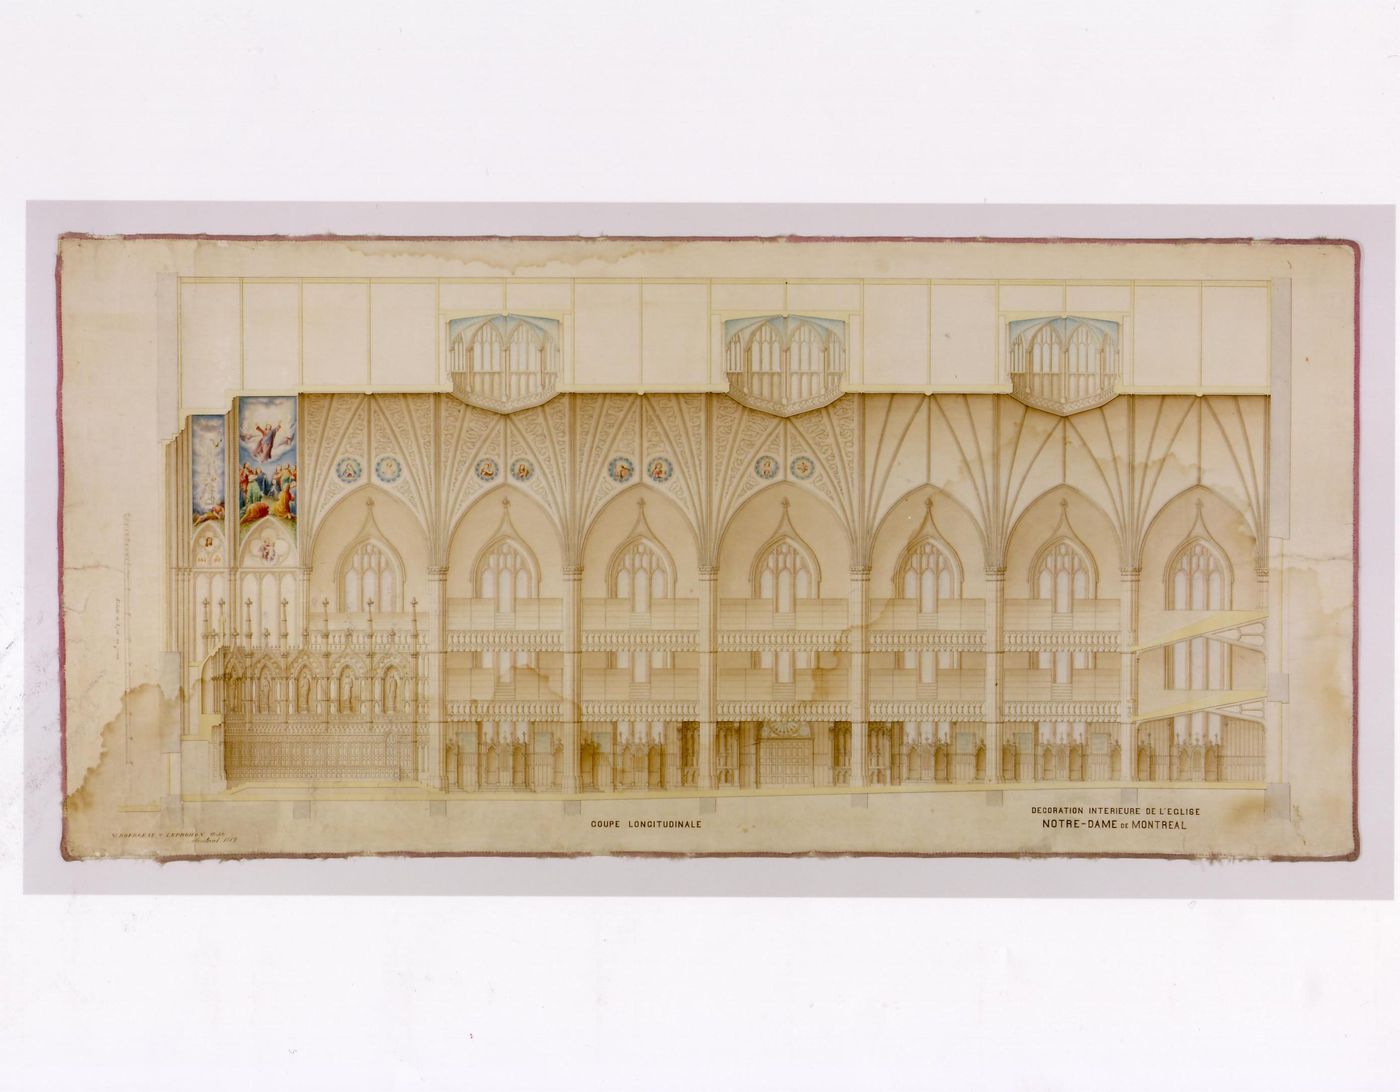 Longitudinal section of Notre-Dame de Montréal showing the interior decorative programme by Bourgeau et Leprohon including ceiling and vault paintings, statues and mouldings